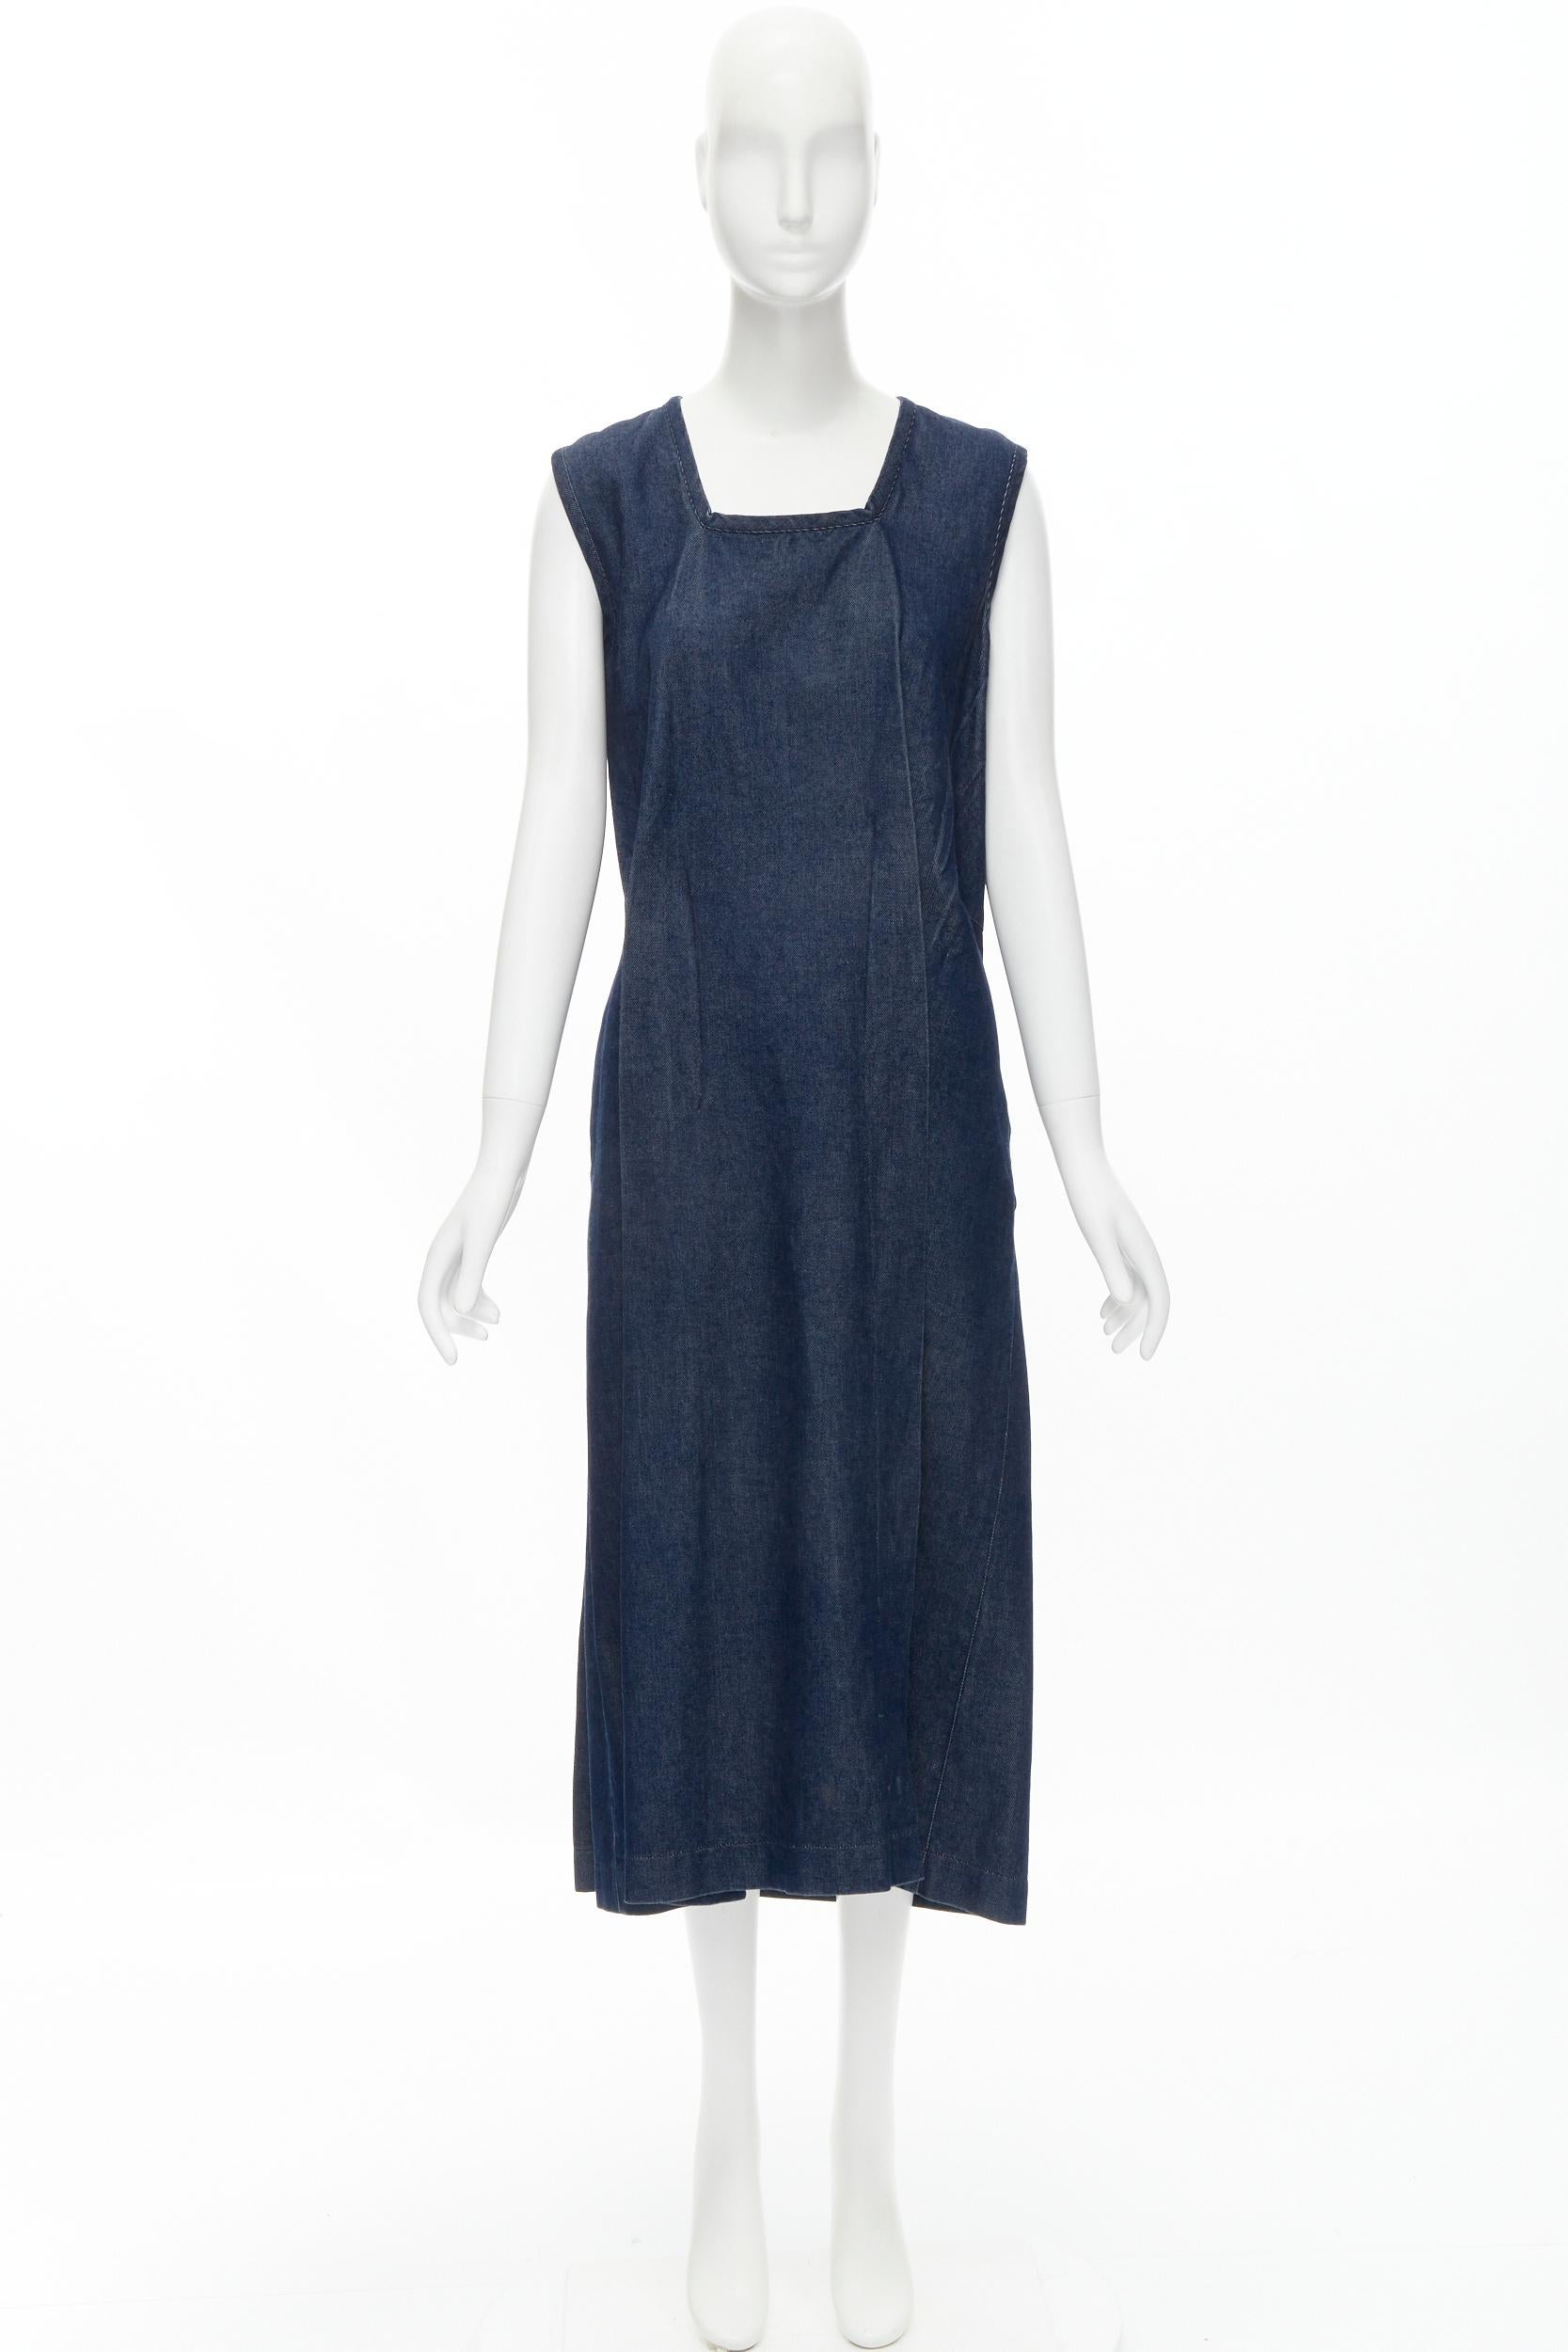 COMME DES GARCONS Vintage 1991 indigo blue denim pinched seam dress M For Sale 5